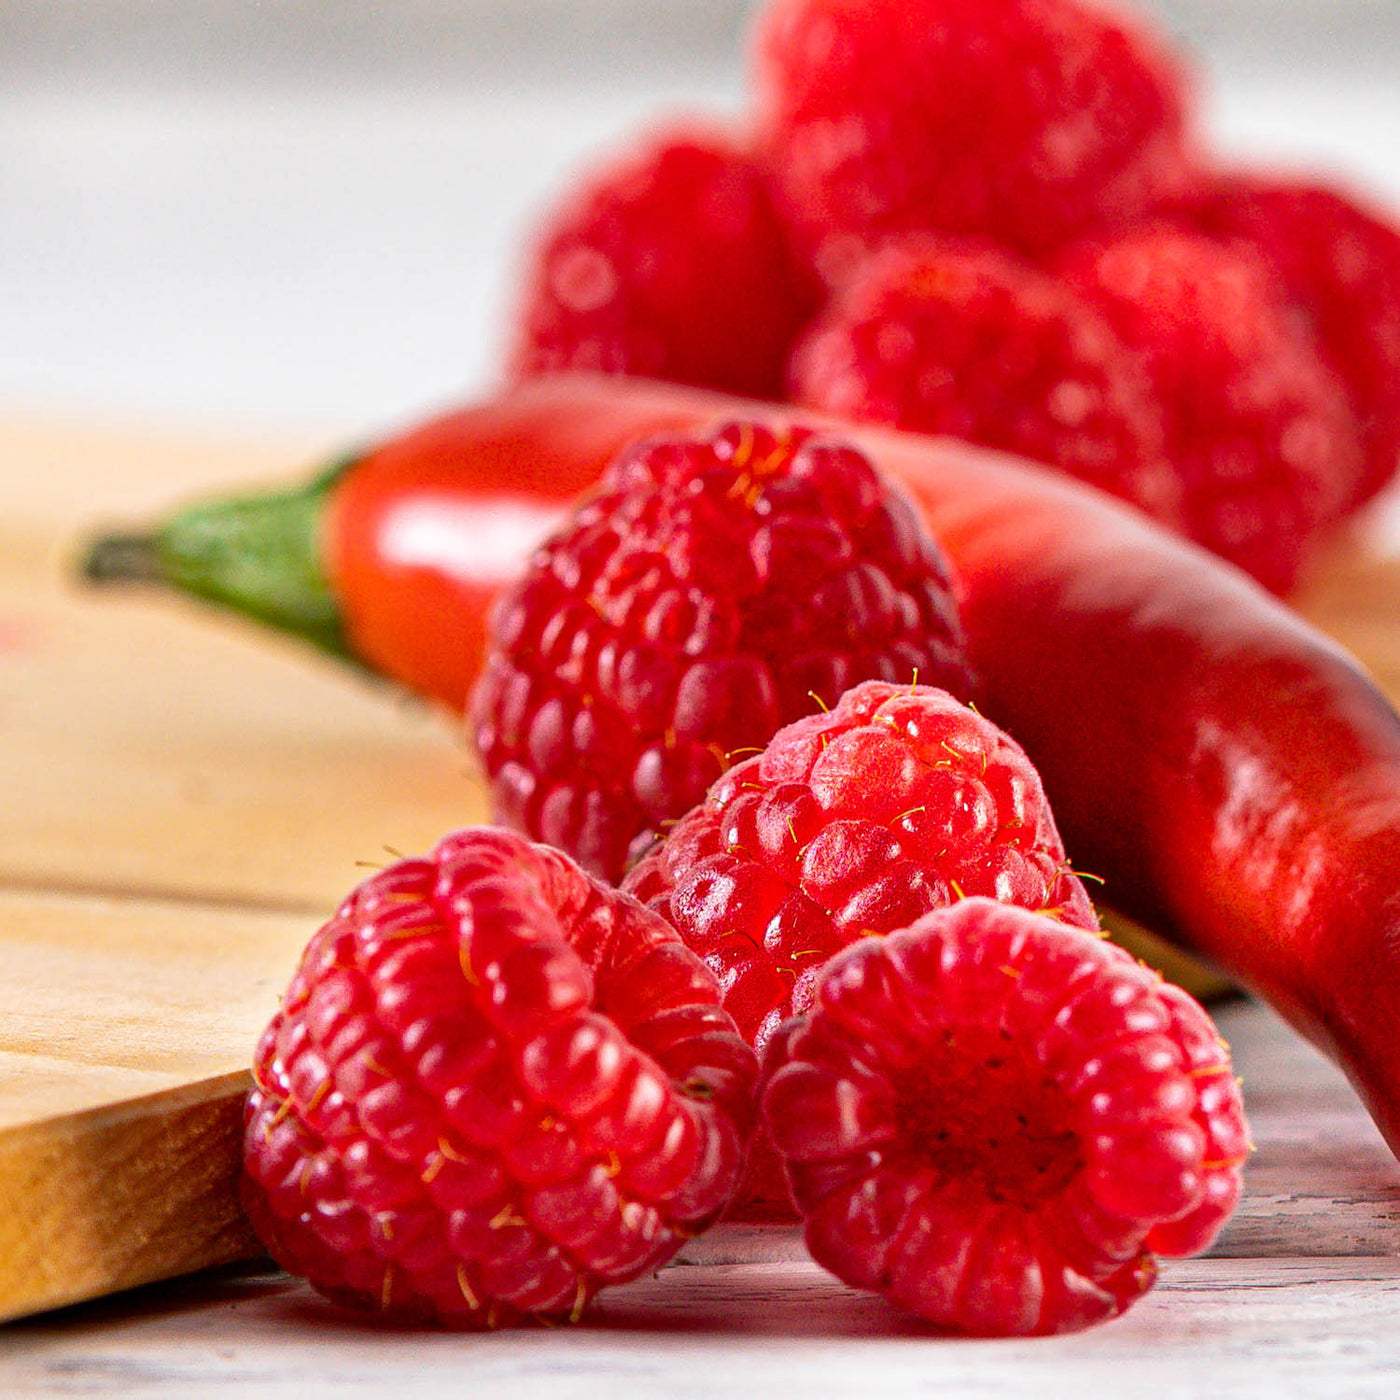 Raspberry & Chilli Jam, 215g. More Fruits, Less Sugar